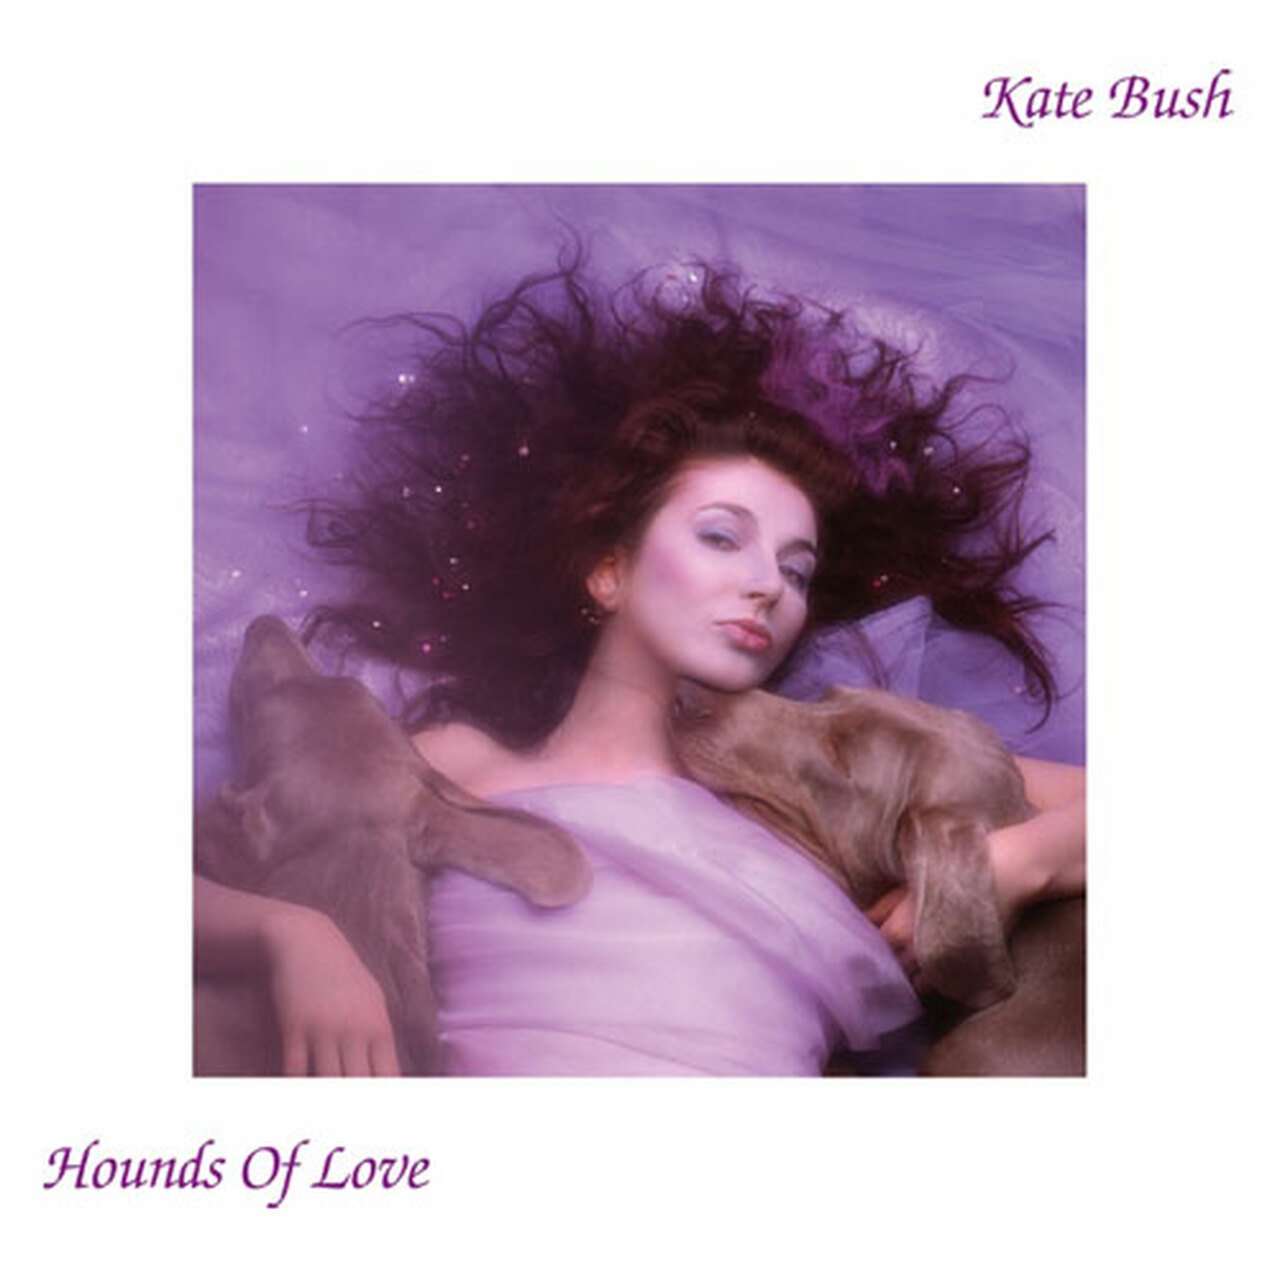 Bush, Kate "Hounds Of Love"